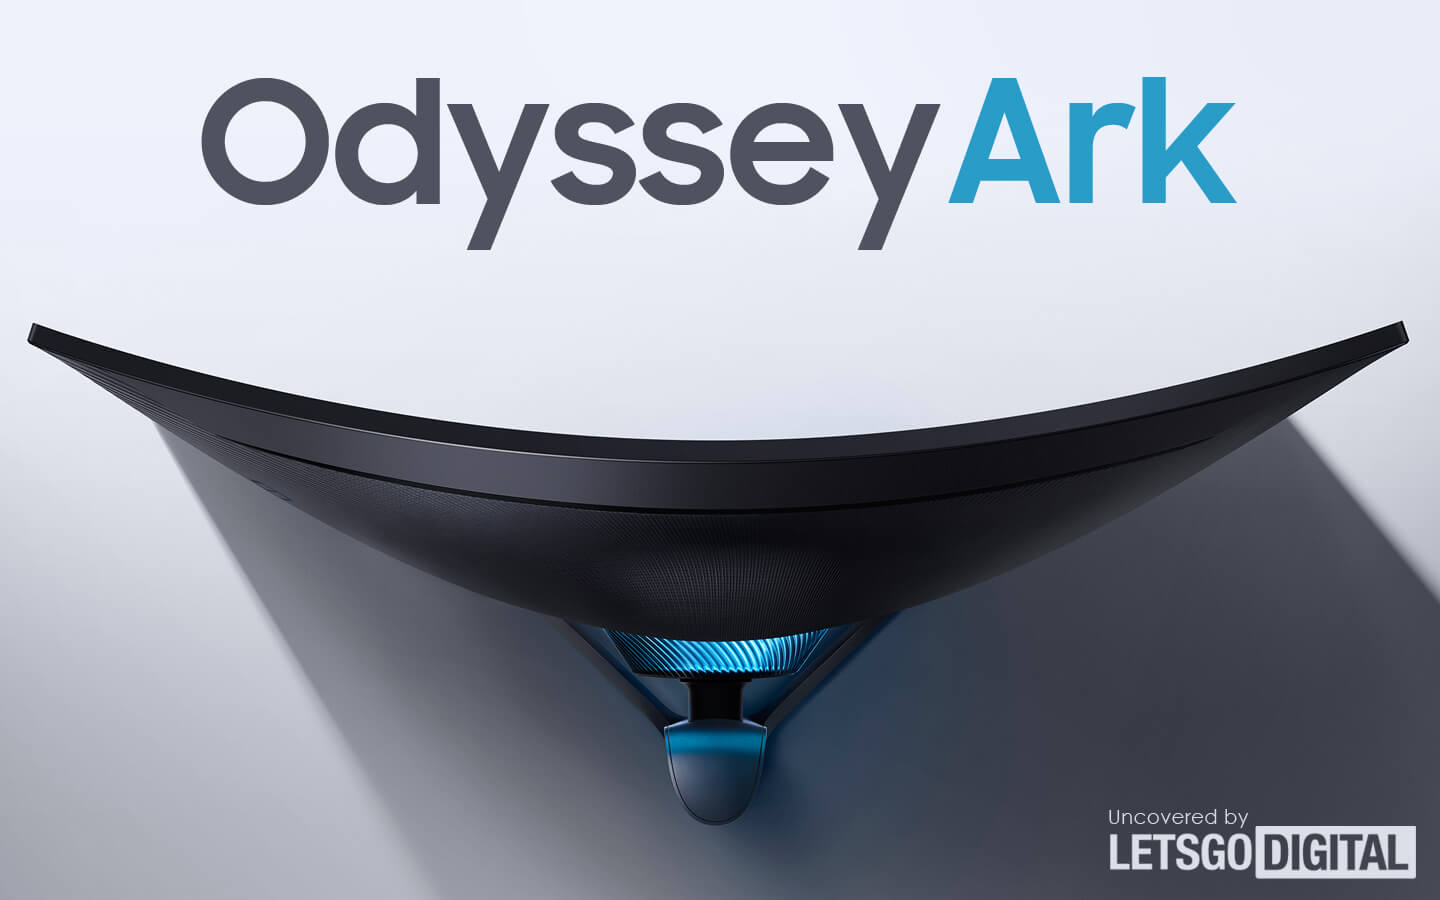 Odyssey Ark gaming monitor